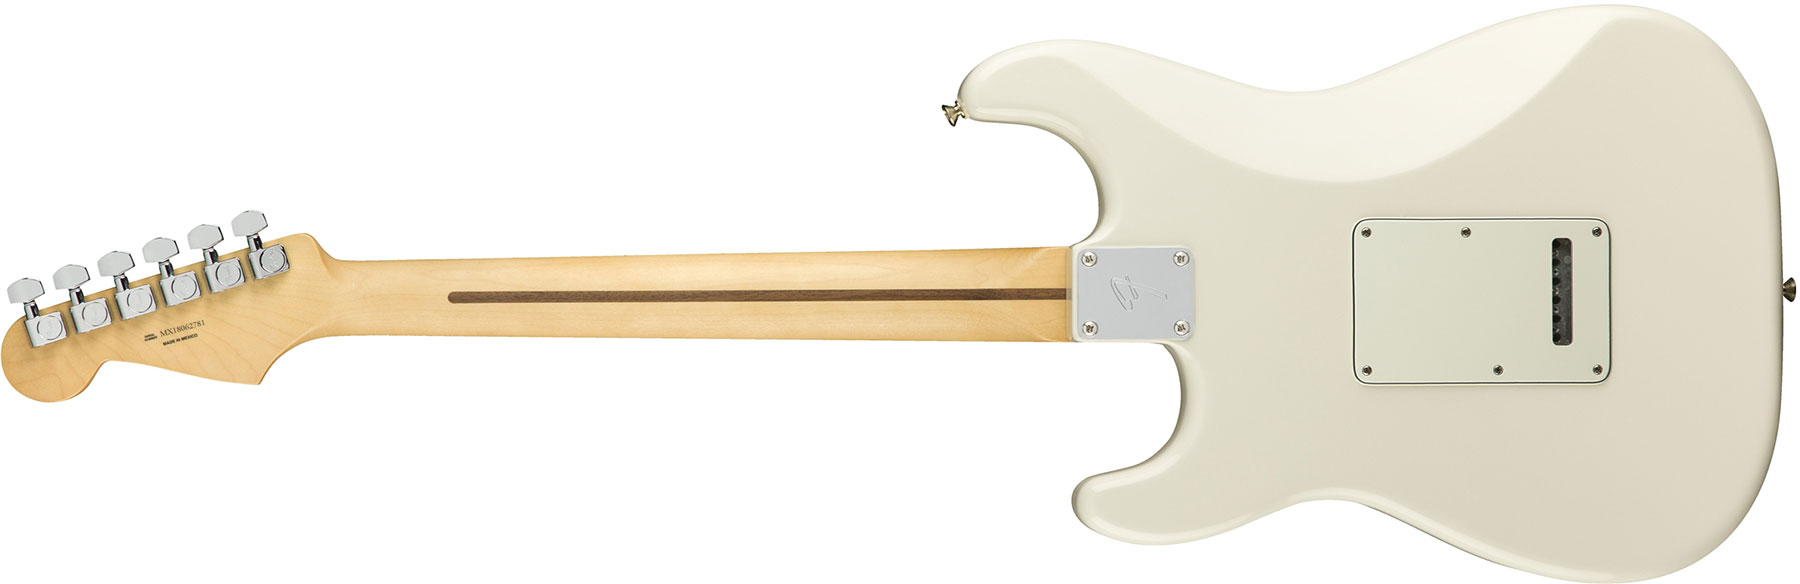 Fender Strat Player Mex Sss Mn - Polar White - Guitare Électrique Forme Str - Variation 1